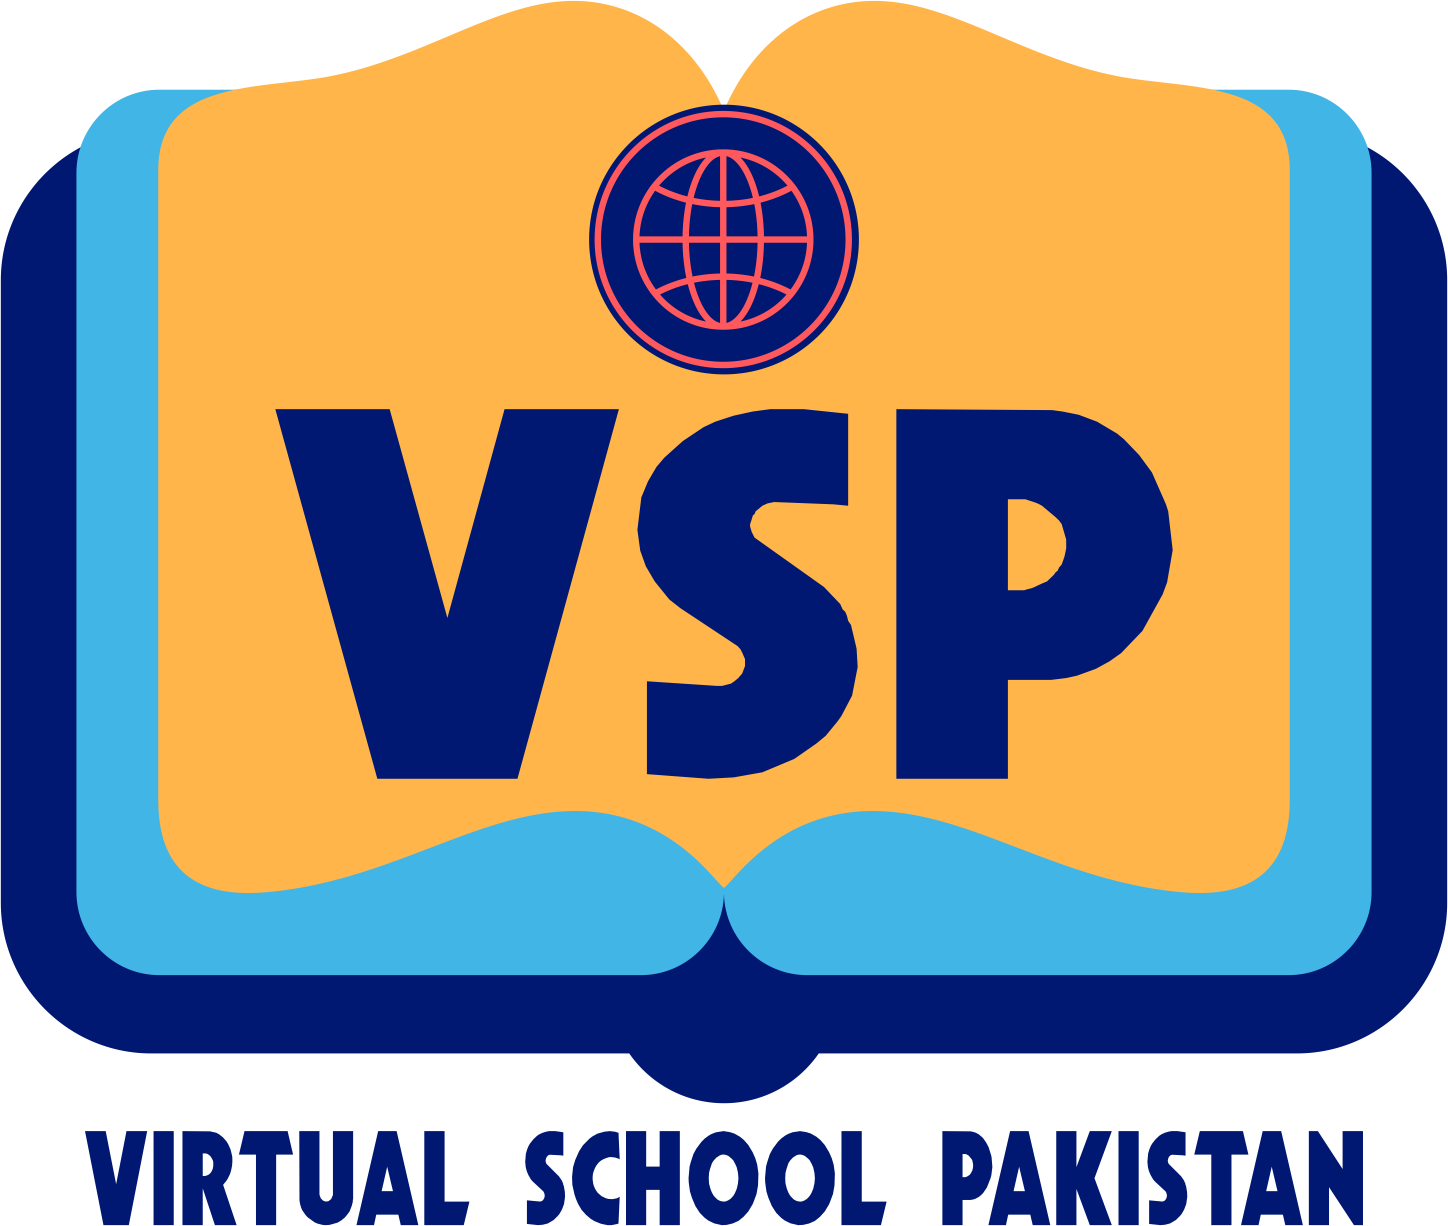 Virtual School Pakistan